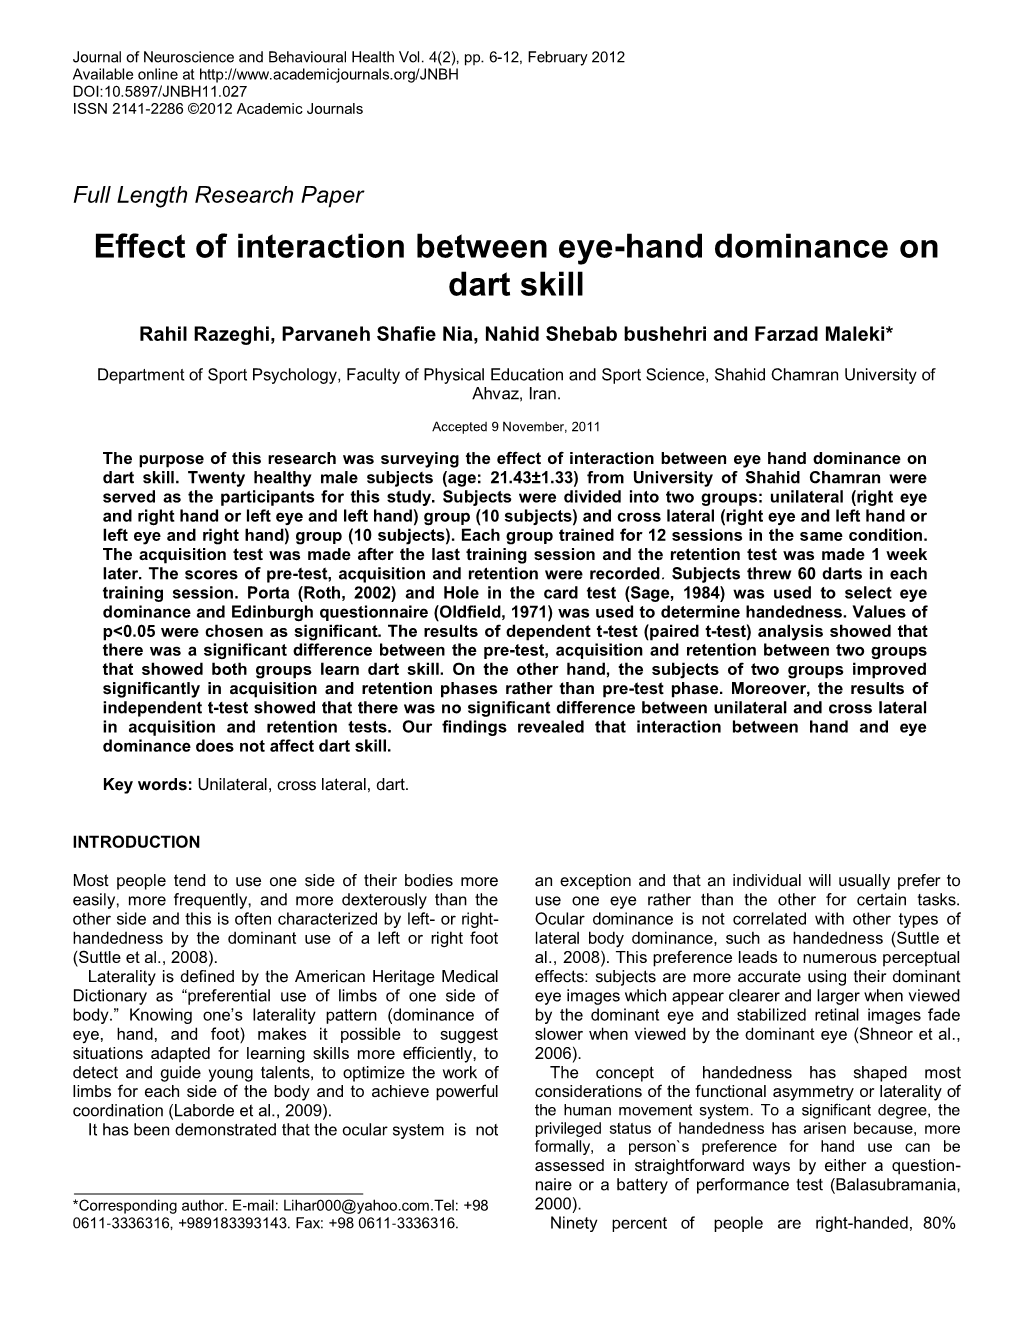 Effect of Interaction Between Eye-Hand Dominance on Dart Skill